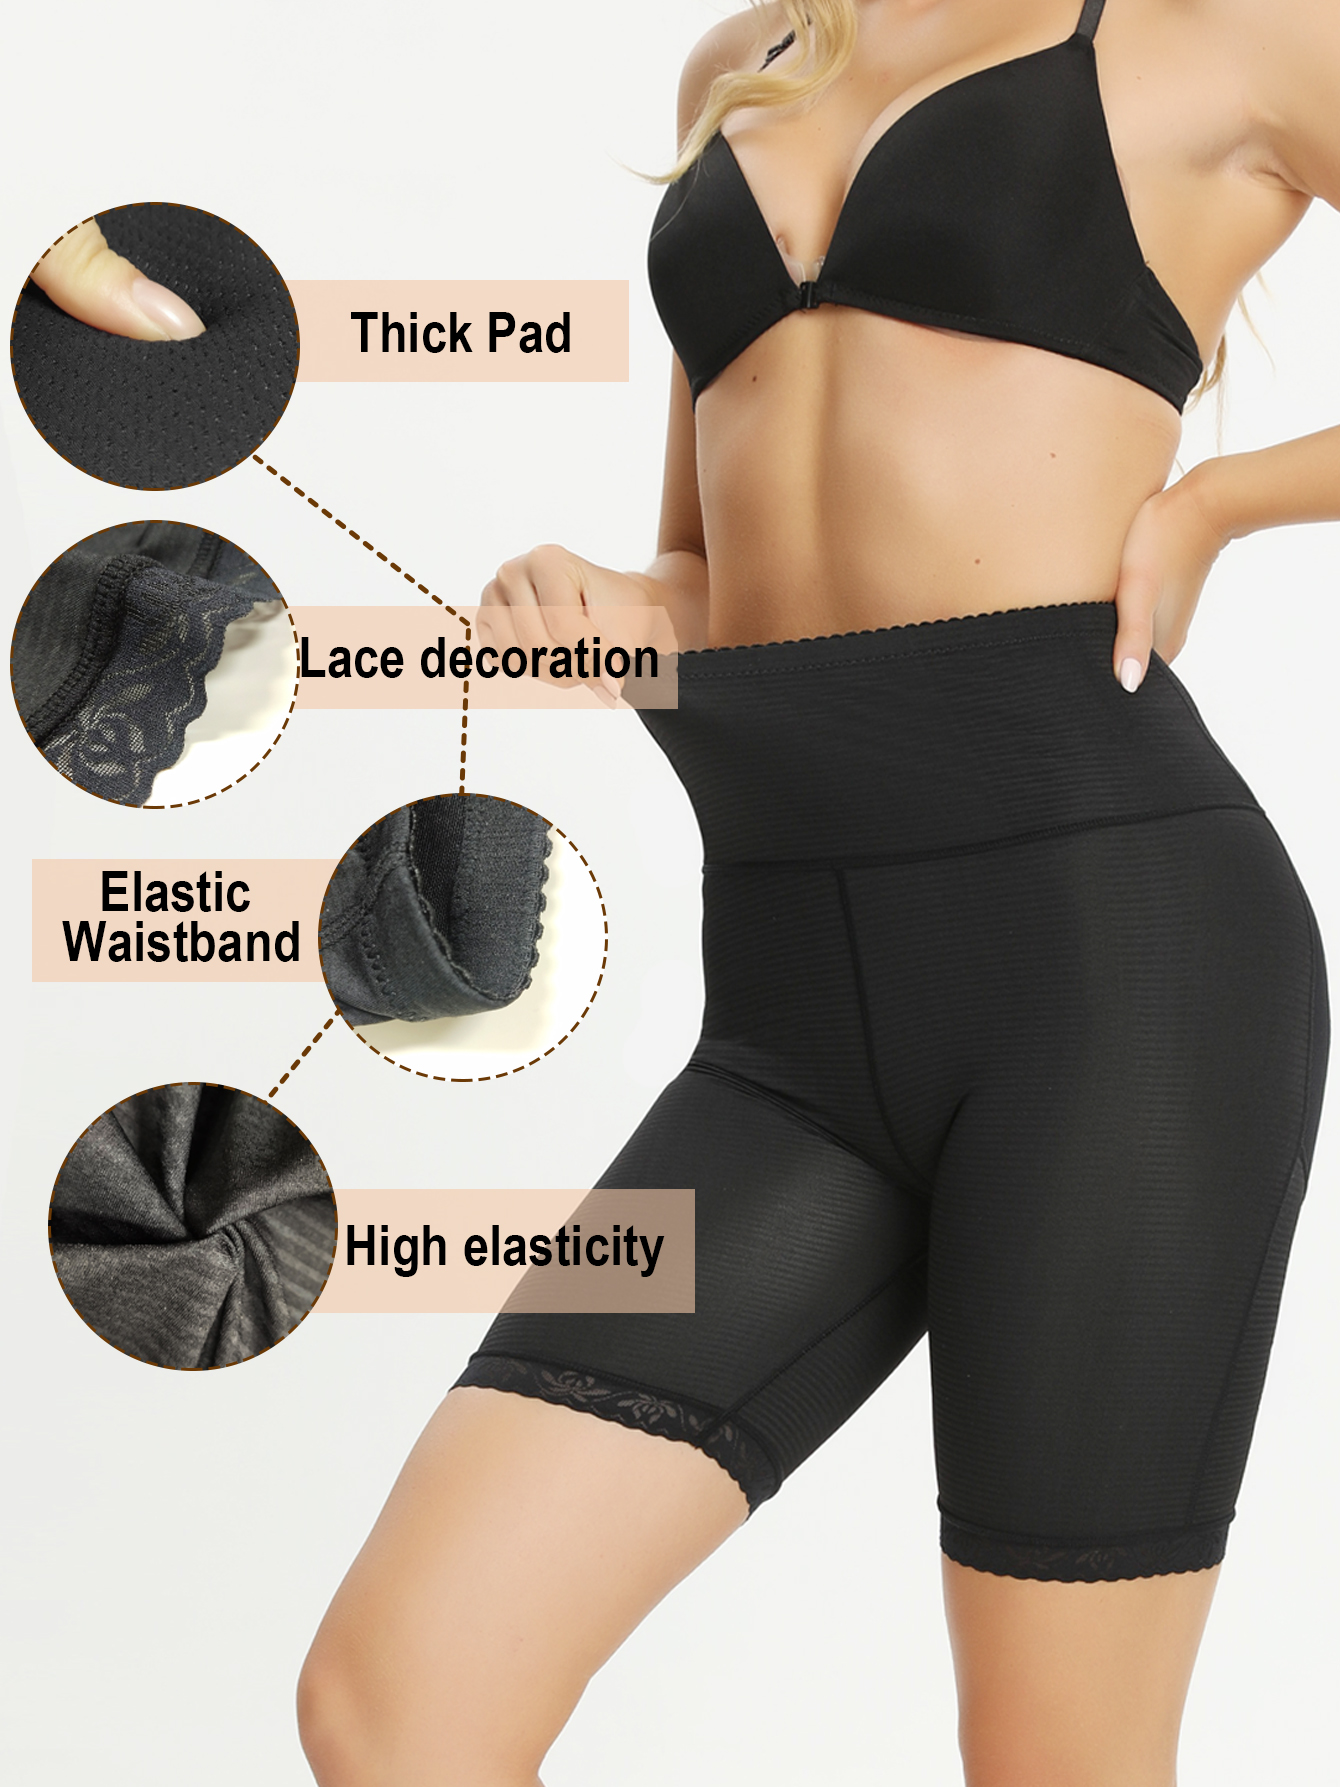 45% Spandex Compression Lace Ajustable Butt Lifter Tummy Control